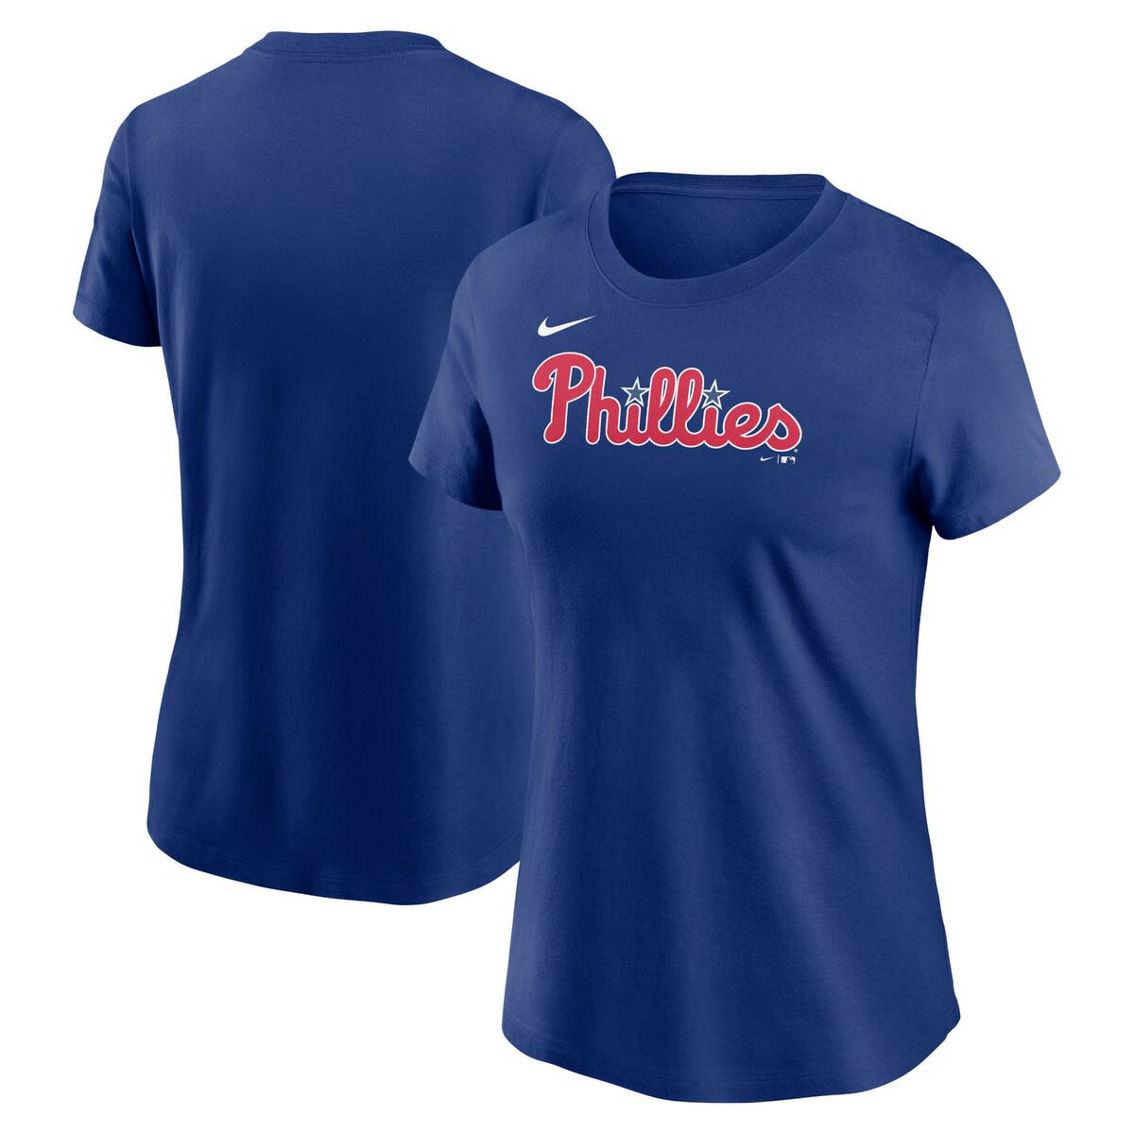 Nike Women's Royal Philadelphia Phillies Wordmark T-Shirt - Image 2 of 4